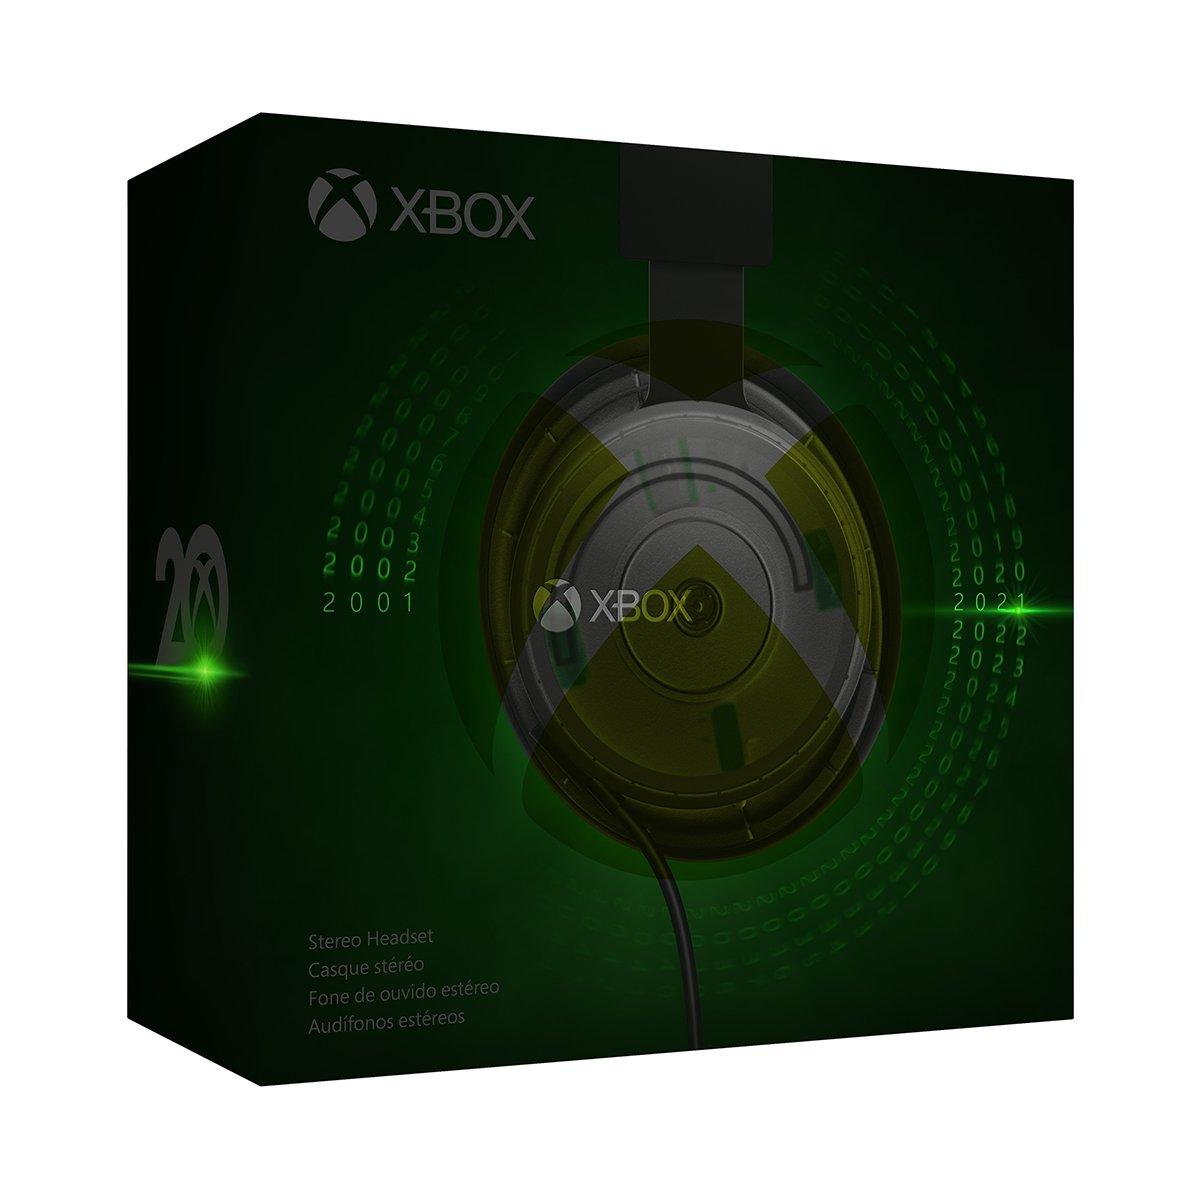 Casque stéréo Xbox One - Microsoft Store Canada